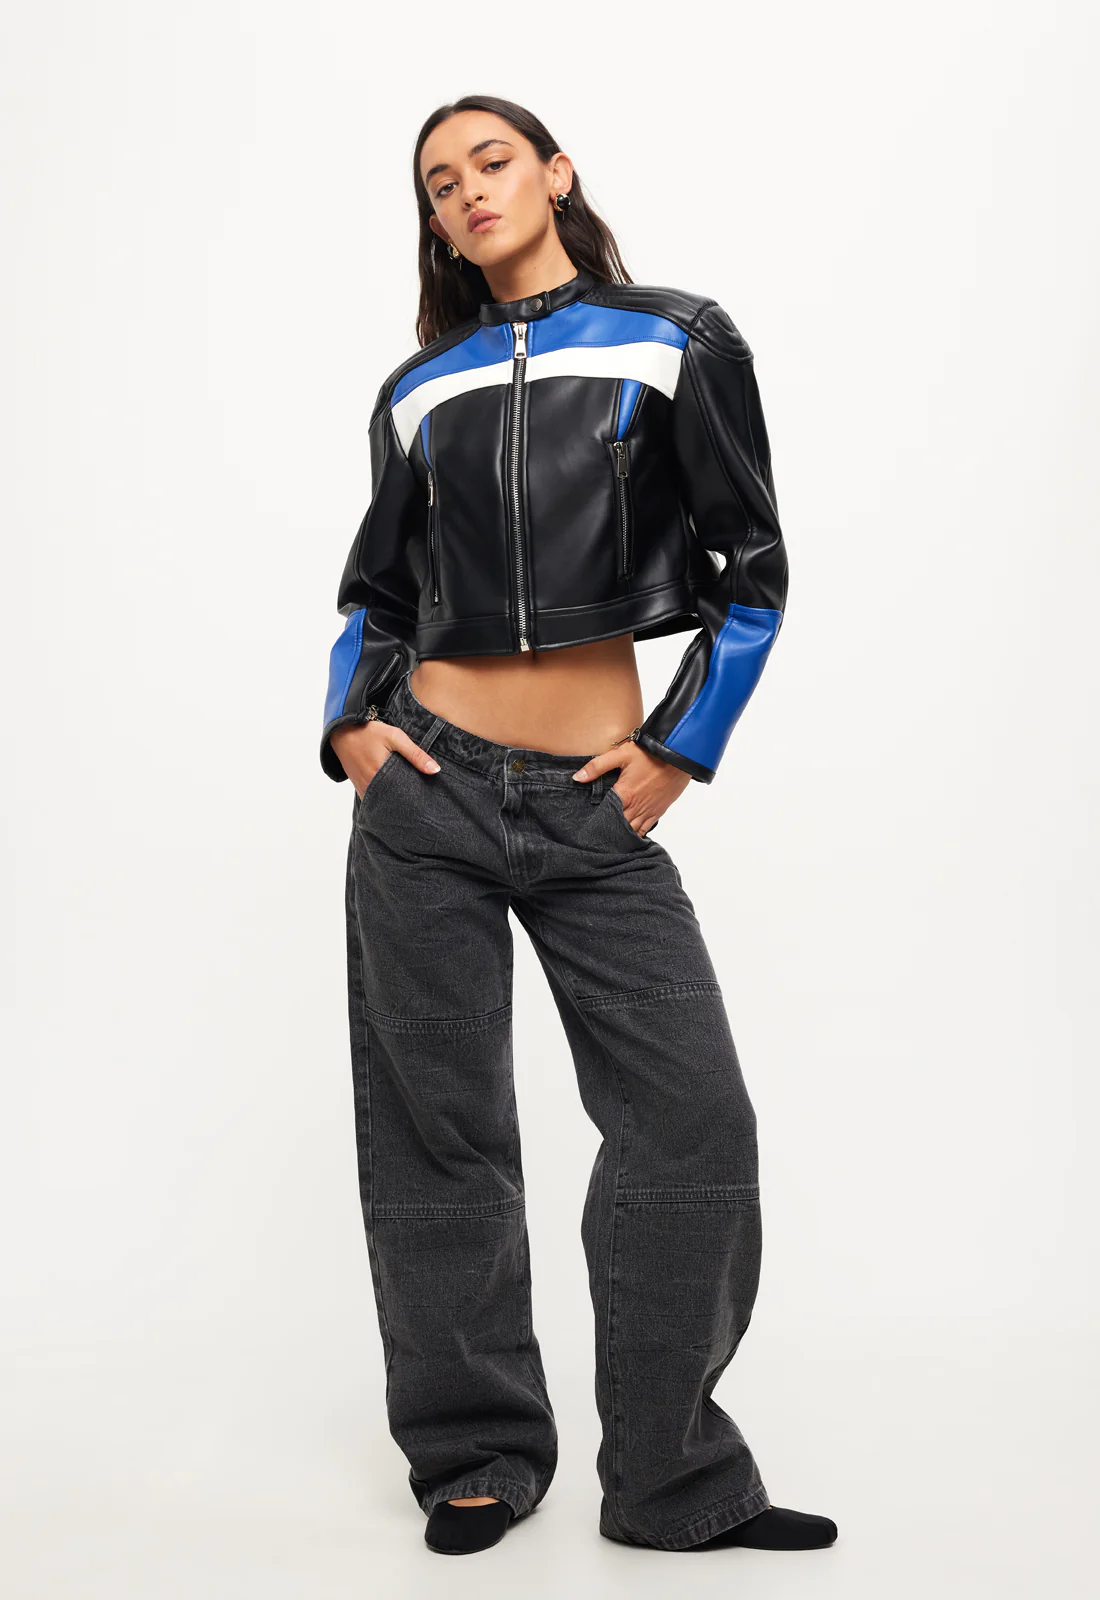 Emily Orozco E! News Leather Jacket - A2 Jackets